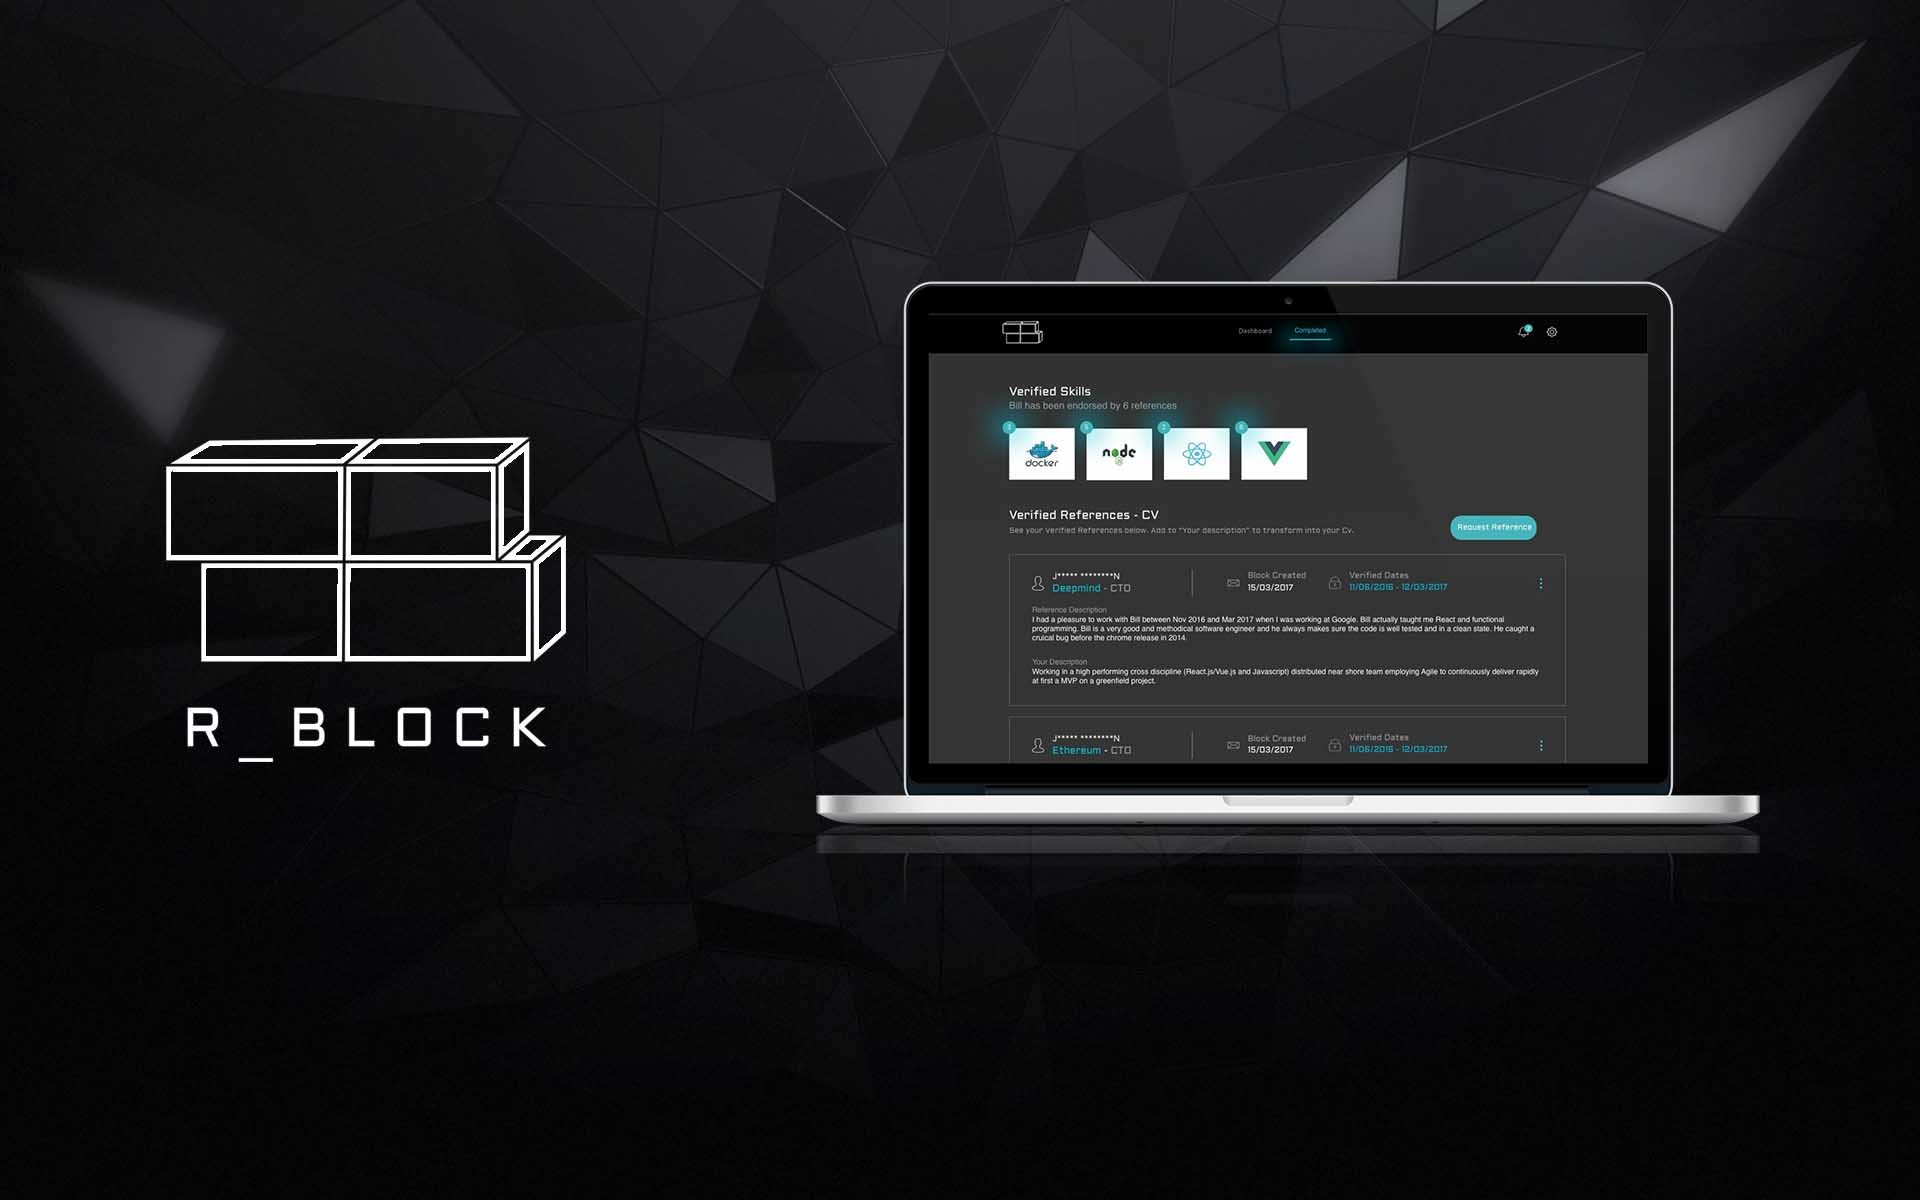 R_Block Announces the Launch of New CVTokens for Blockchain Based Hiring Network